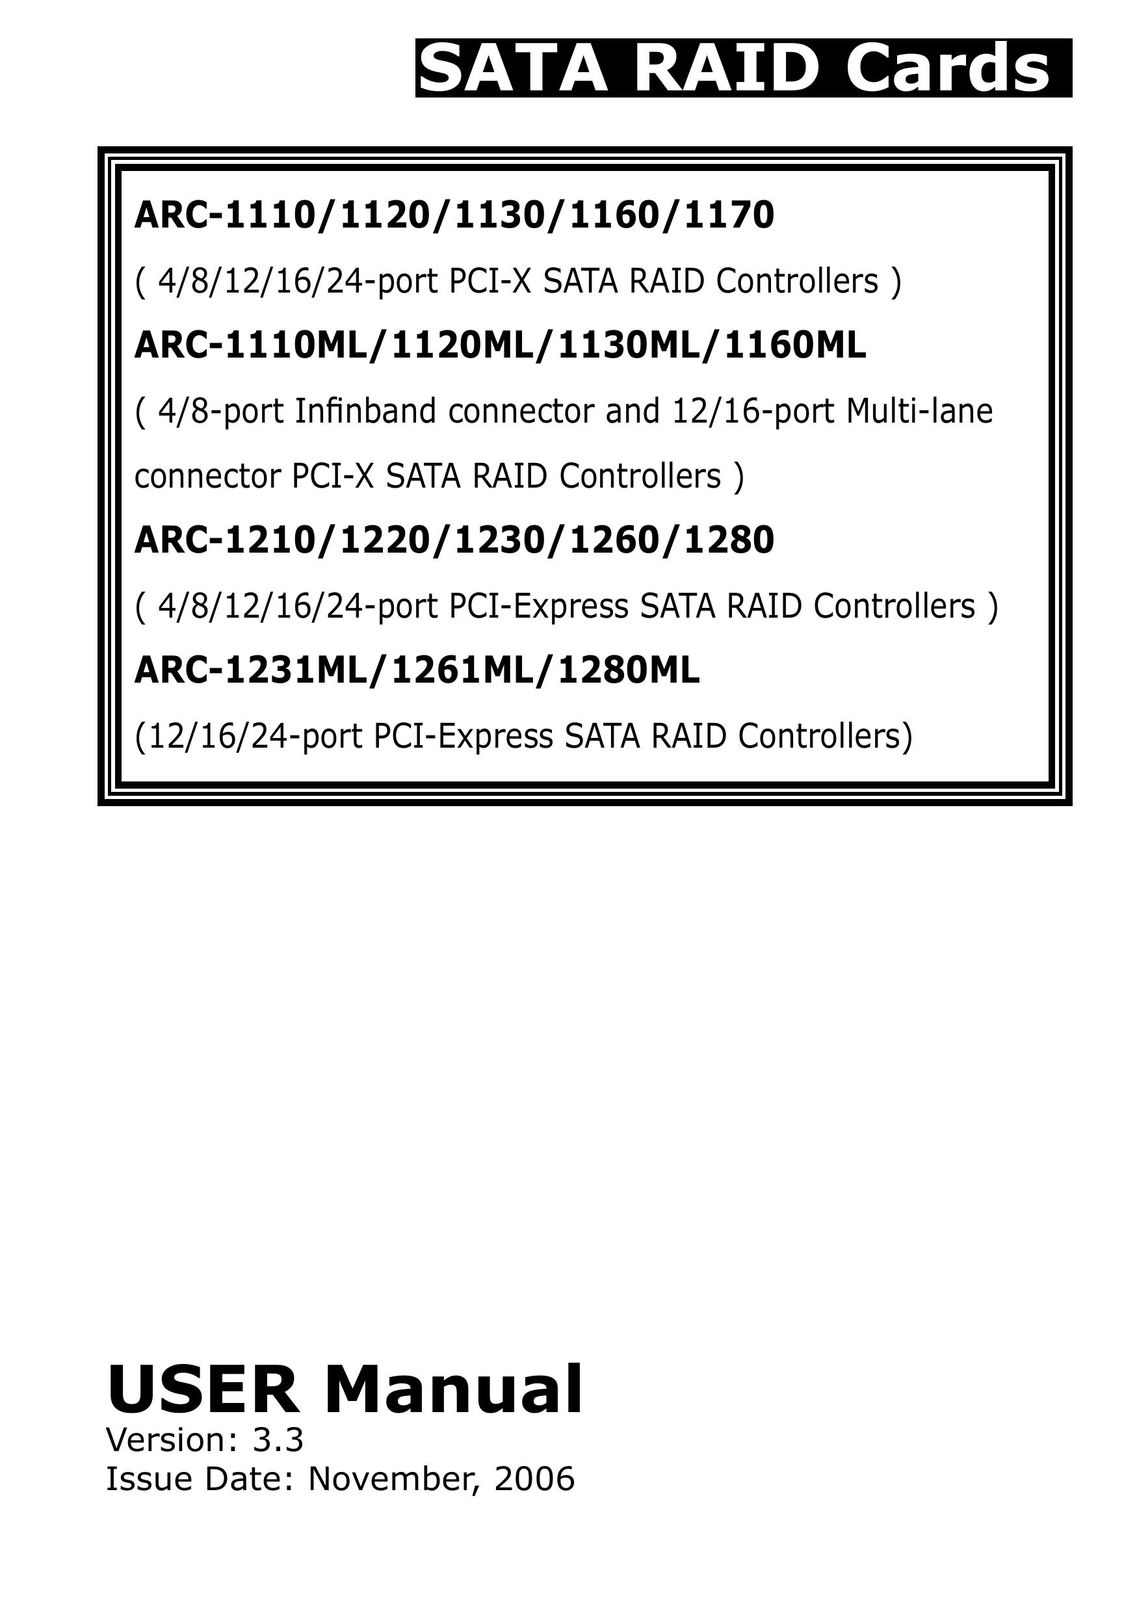 Areca ARC-1130 Computer Hardware User Manual